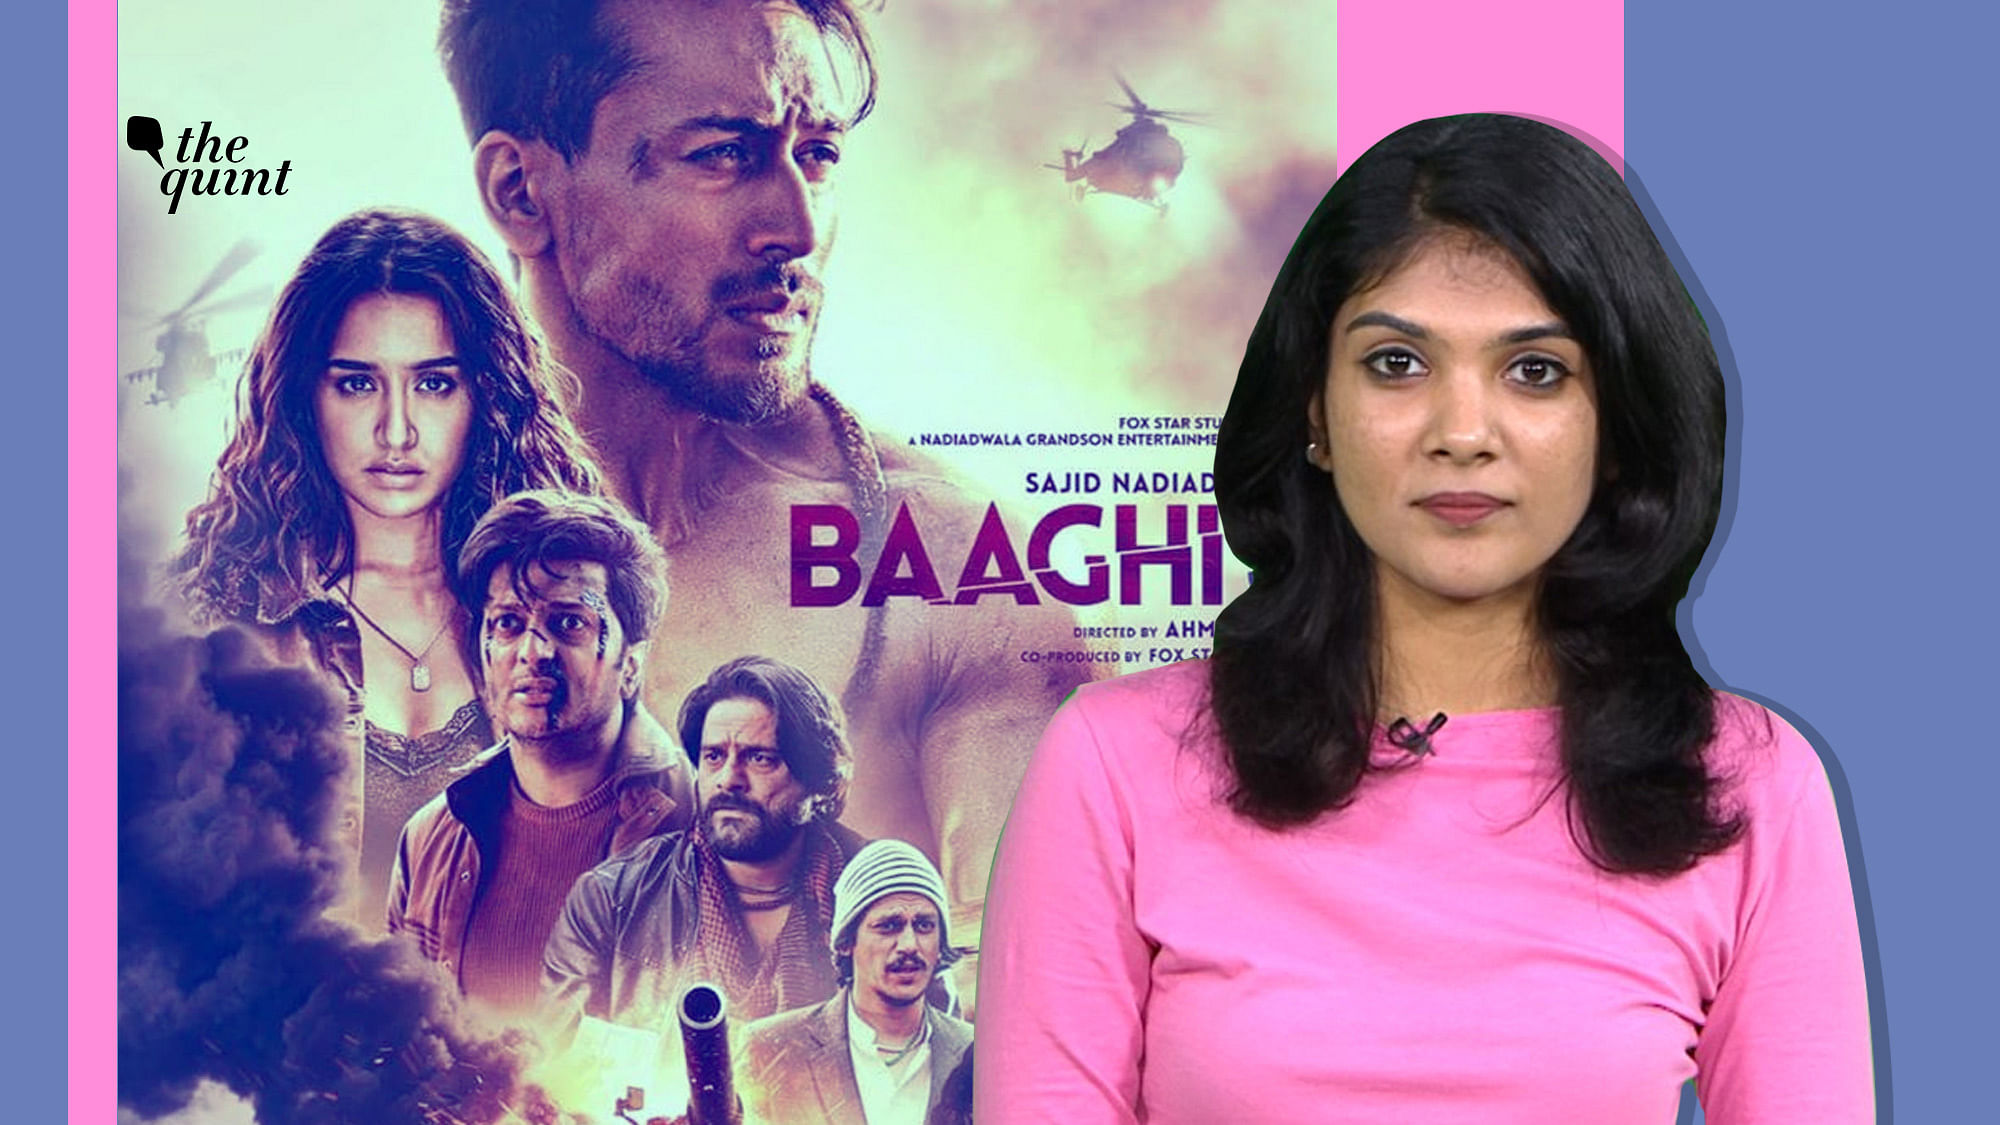 <i>Baaghi 3 </i>stars Tiger Shroff, Riteish Deshmukh and Shraddha Kapoor.